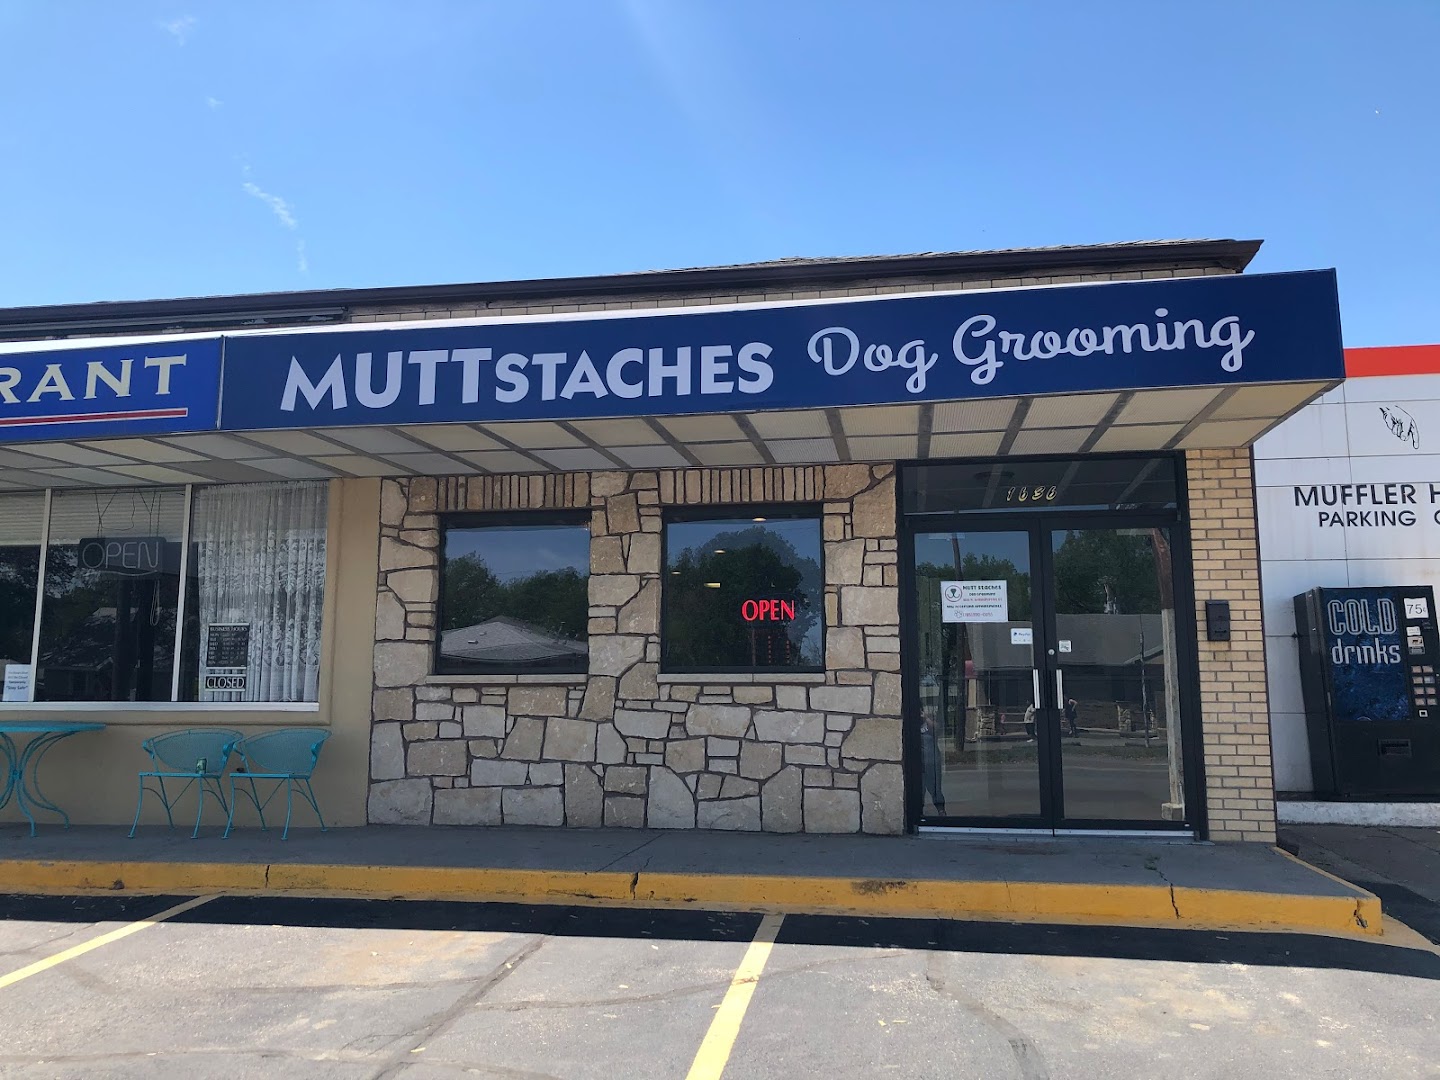 Muttstaches Dog Grooming